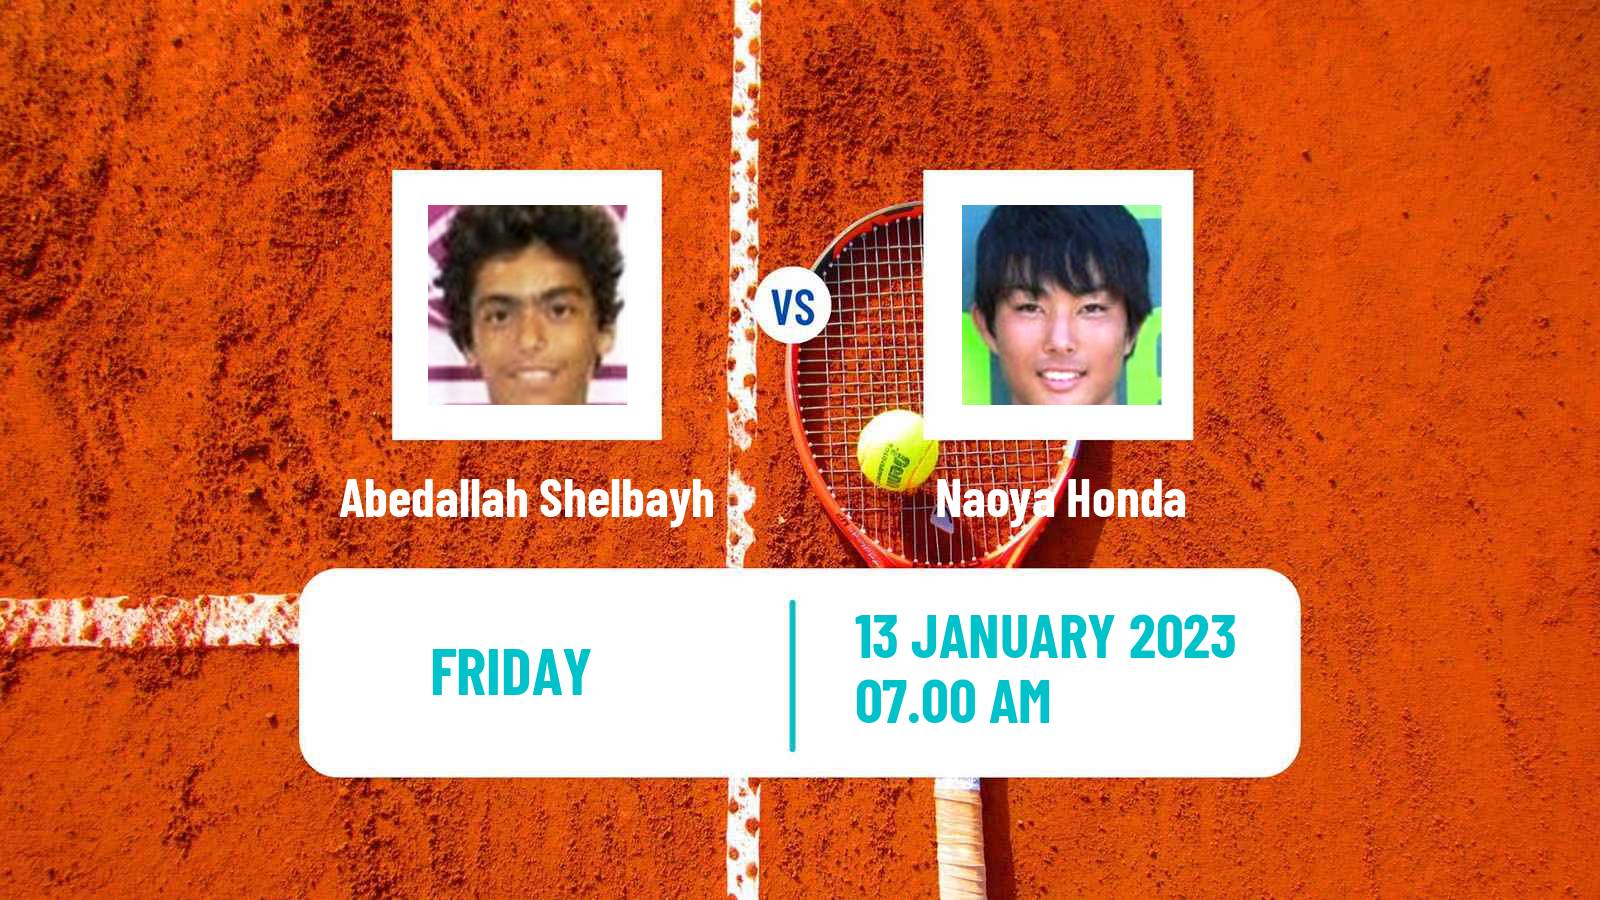 Tennis ITF Tournaments Abedallah Shelbayh - Naoya Honda